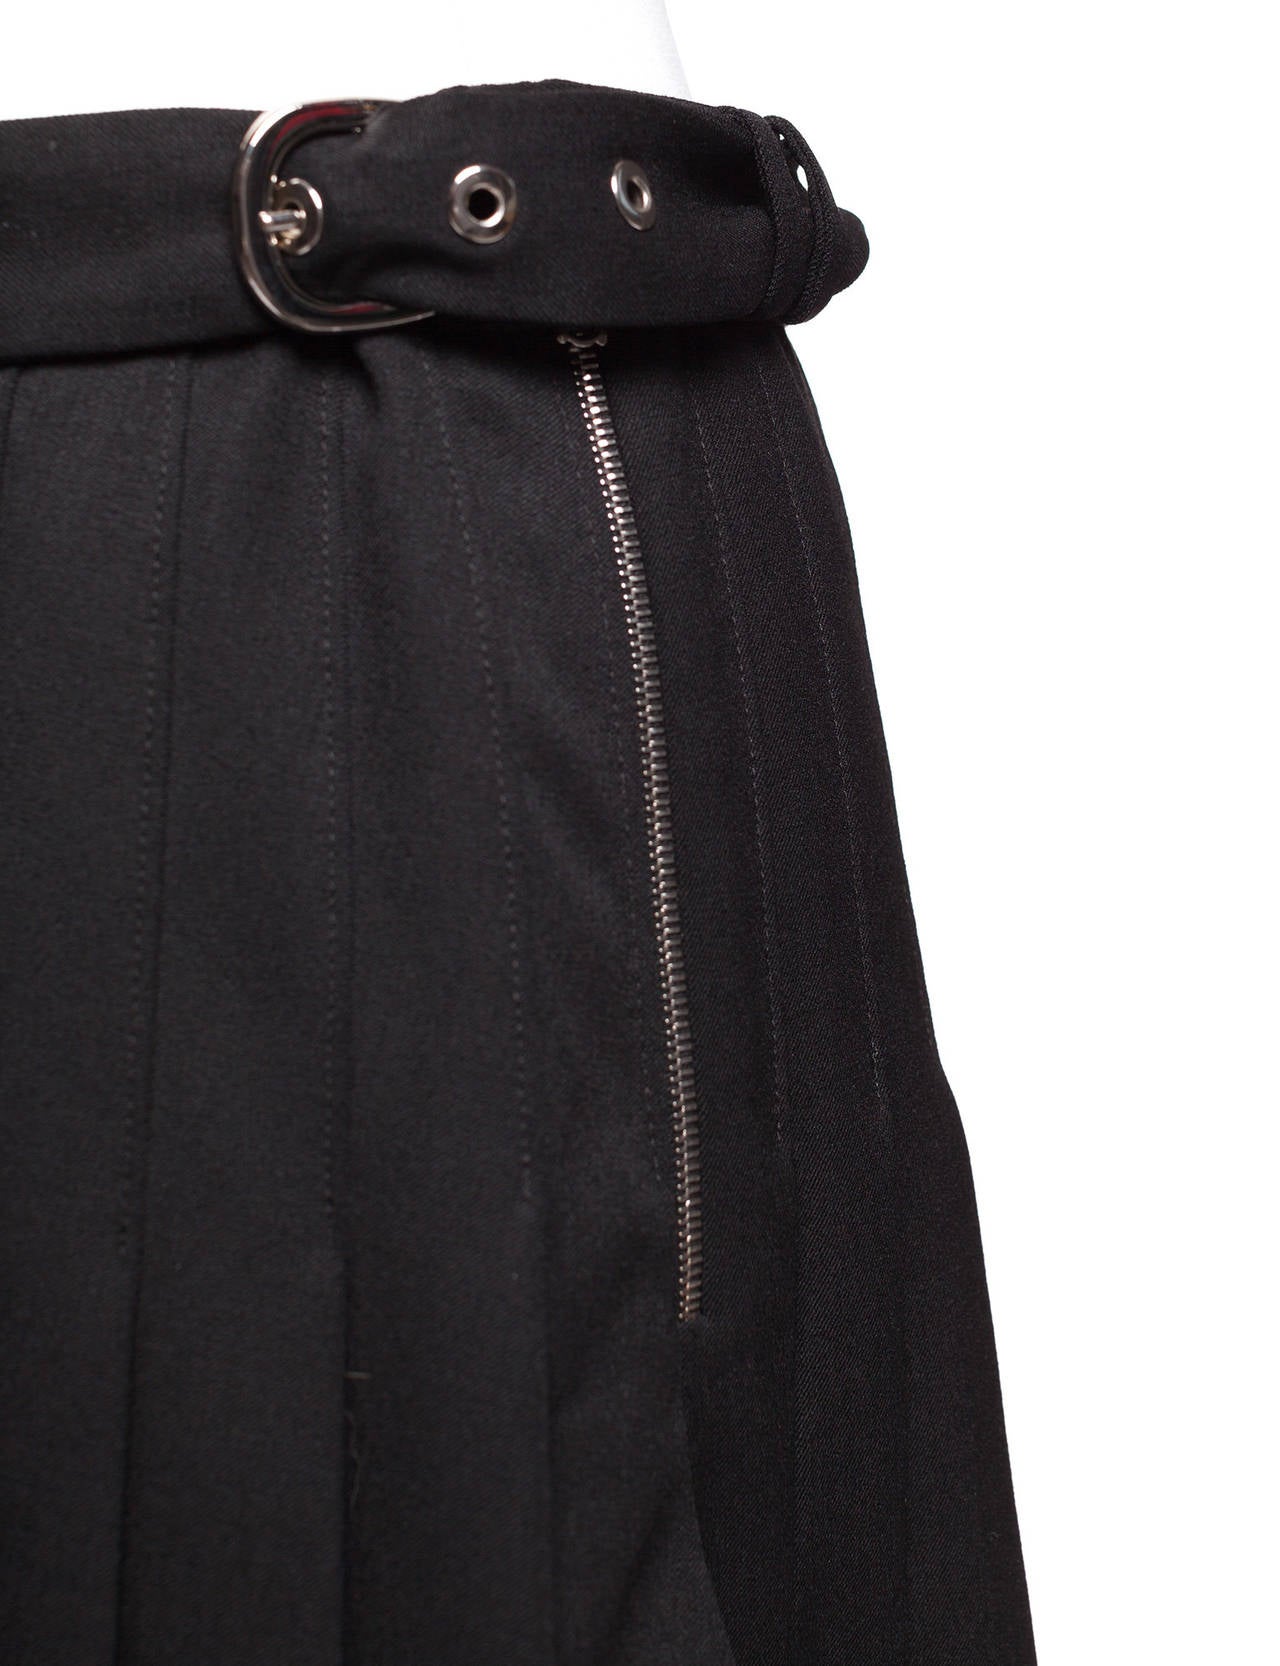 Balenciaga by Nicolas Ghesquire pleated cargo mini skirt. 1